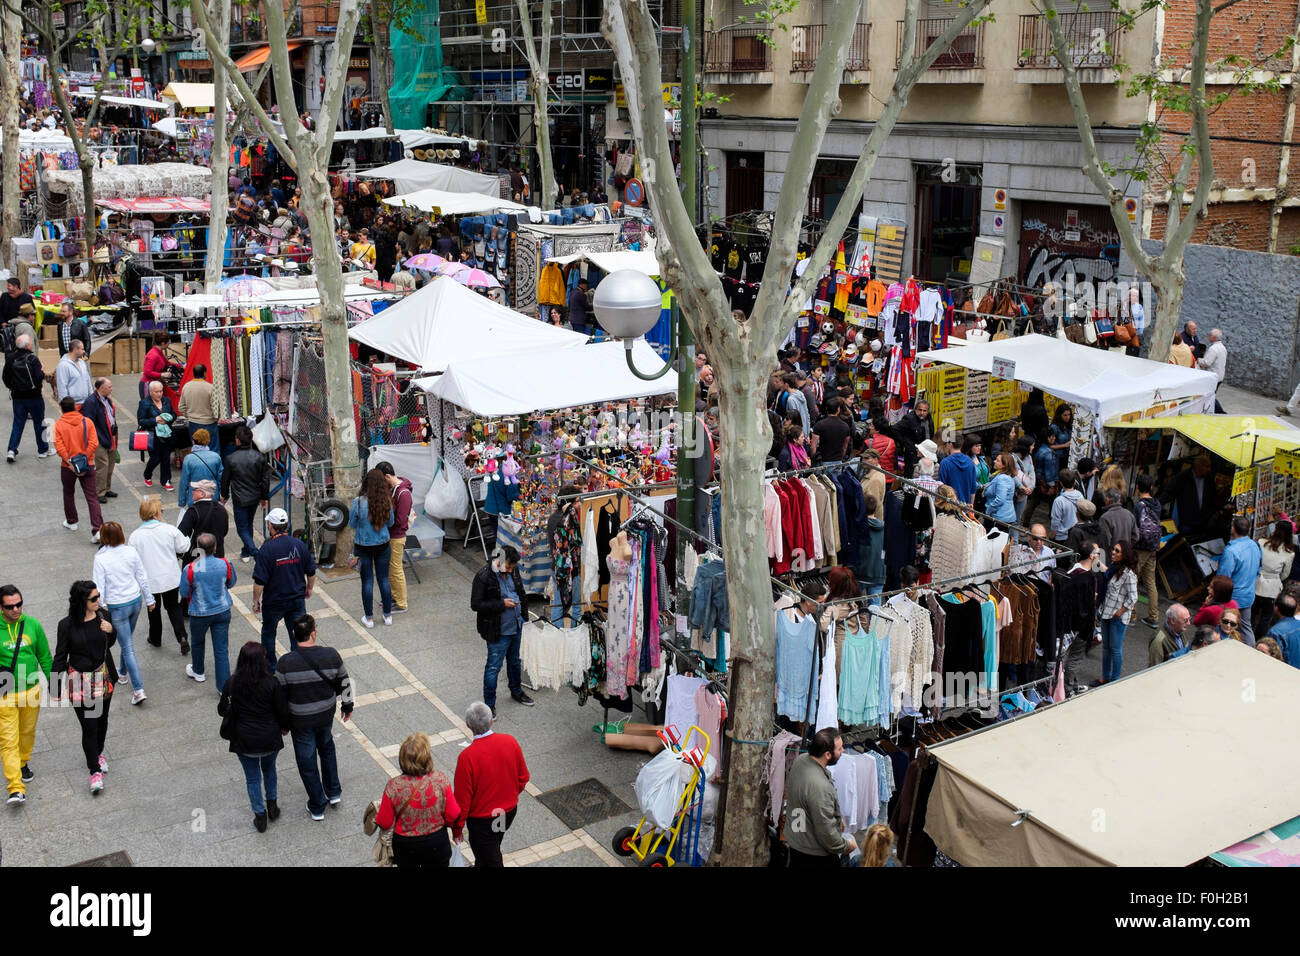 El Rastro flea market, busy with shoppers, Madrid, Spain. Stock Photo